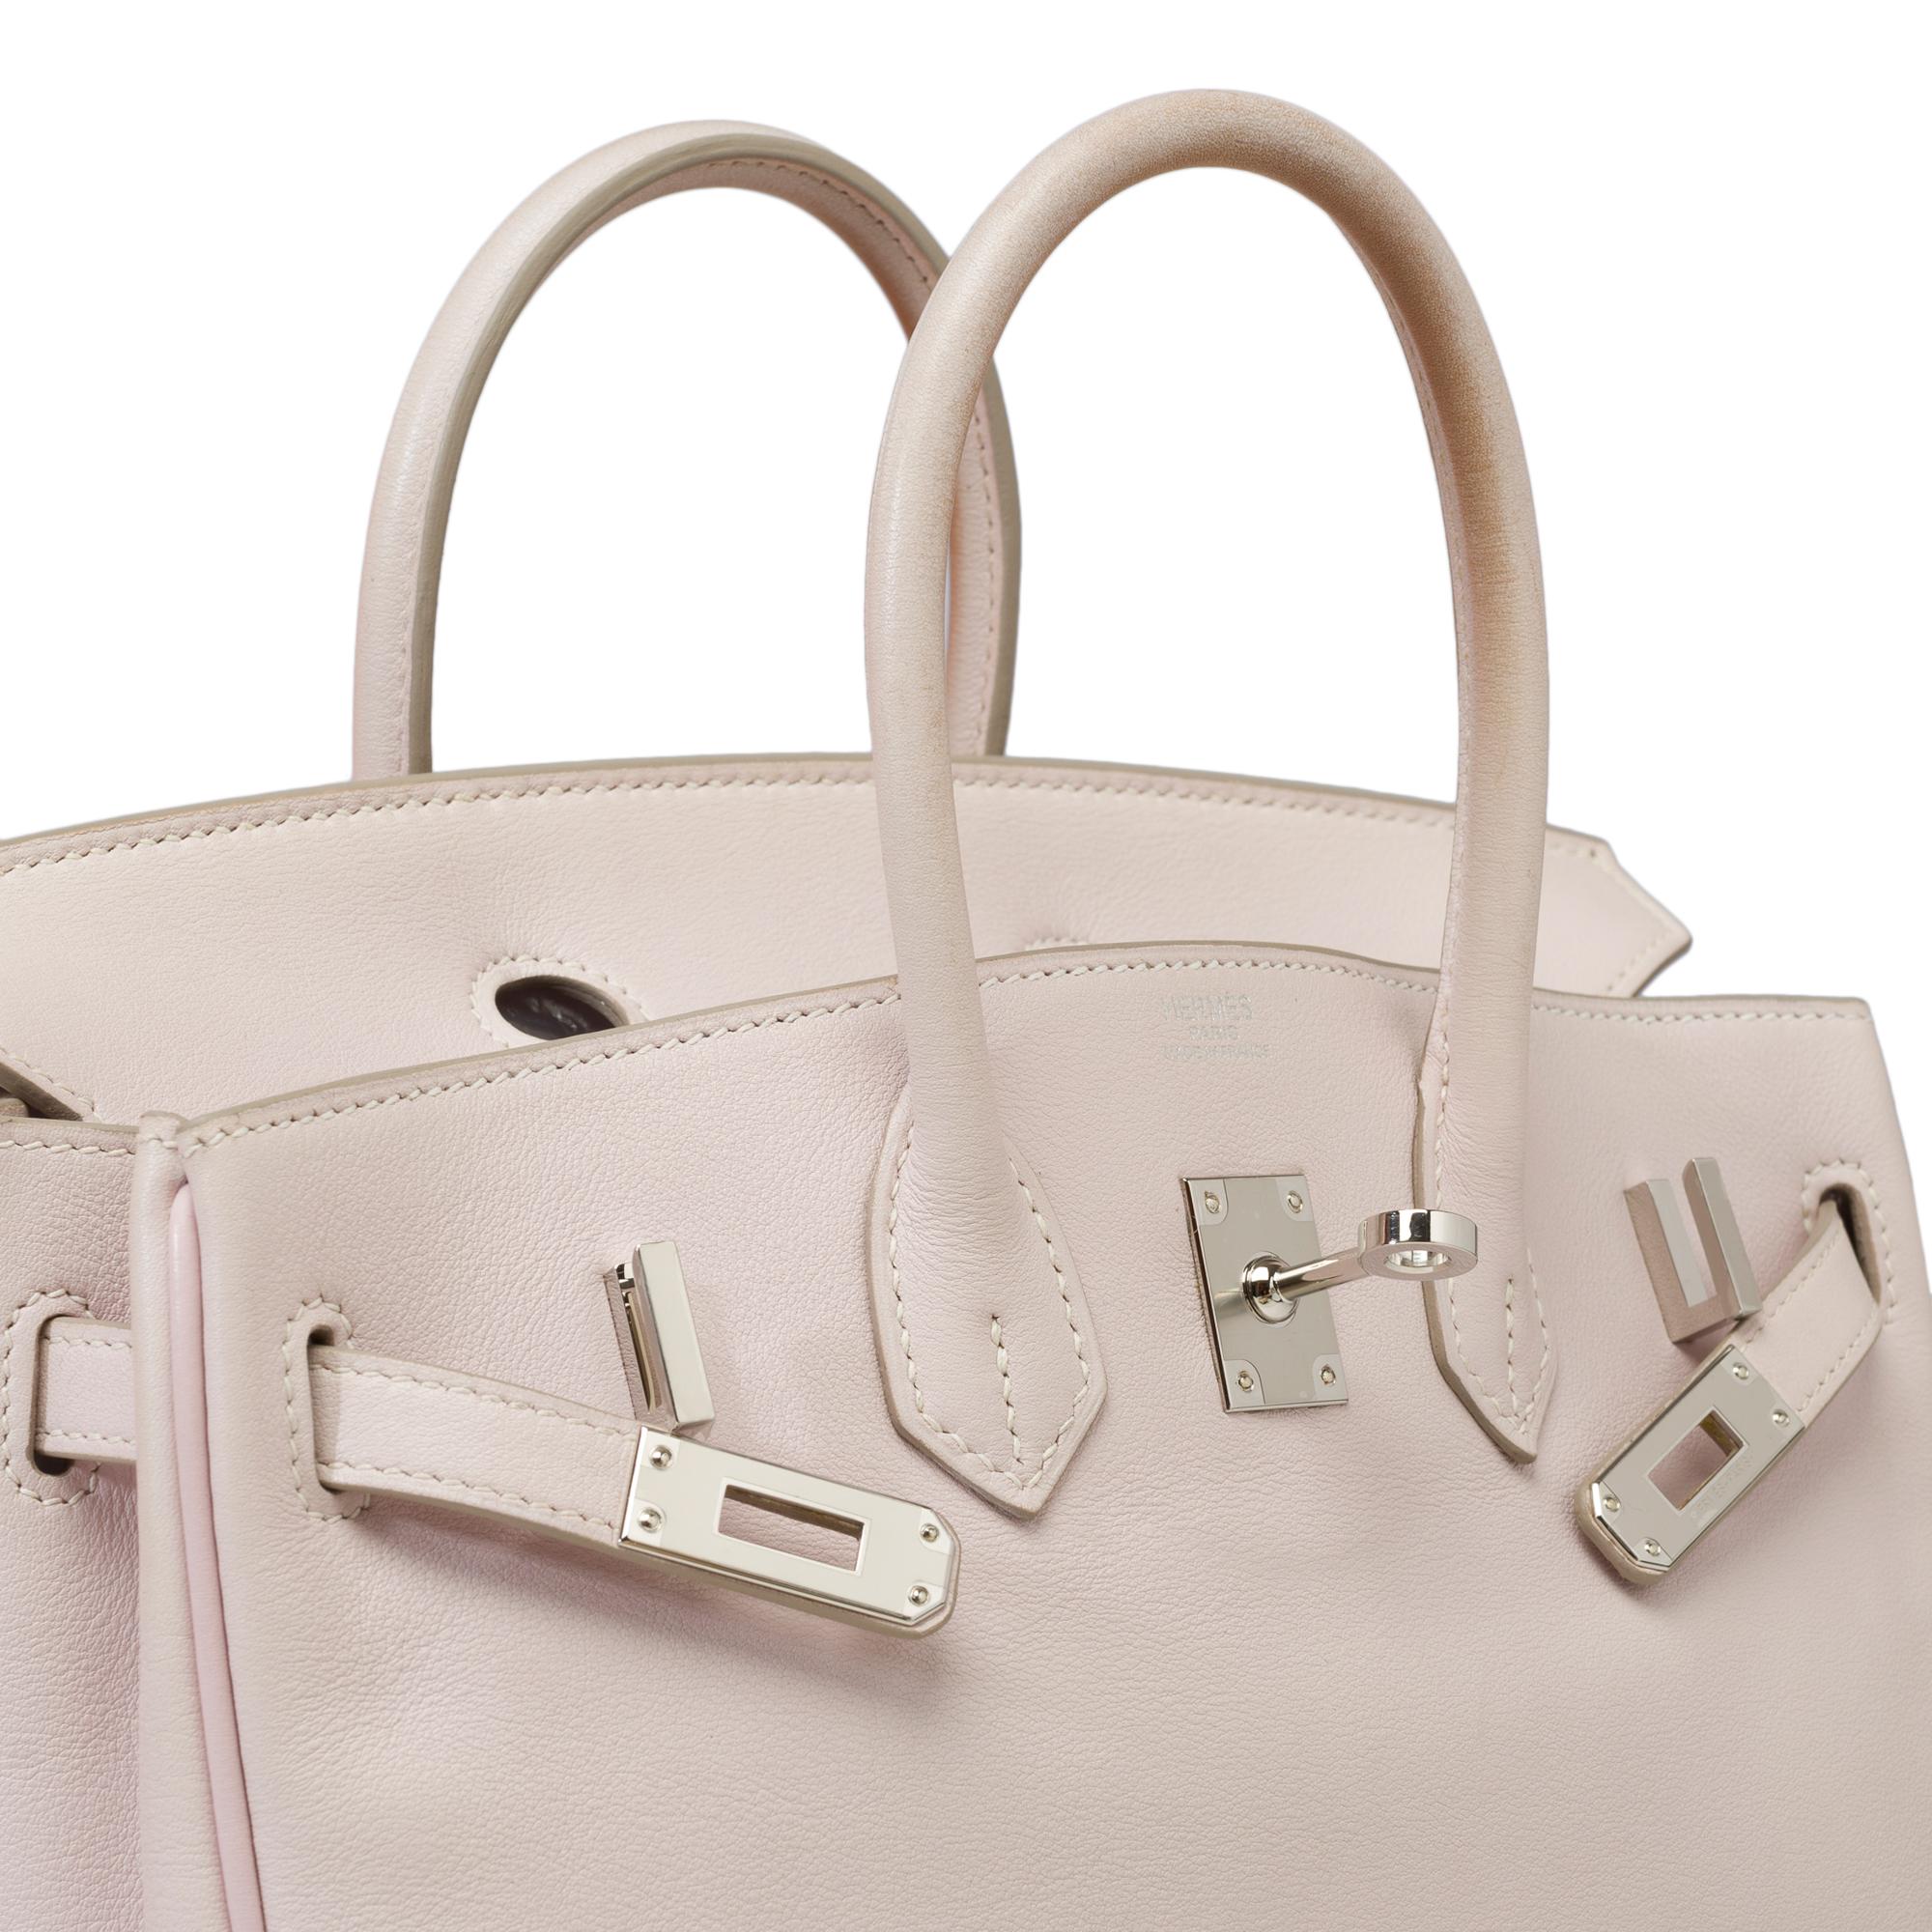 Amazing Hermes Birkin 25cm handbag in Rose Dragee Swift Calf leather, SHW For Sale 3